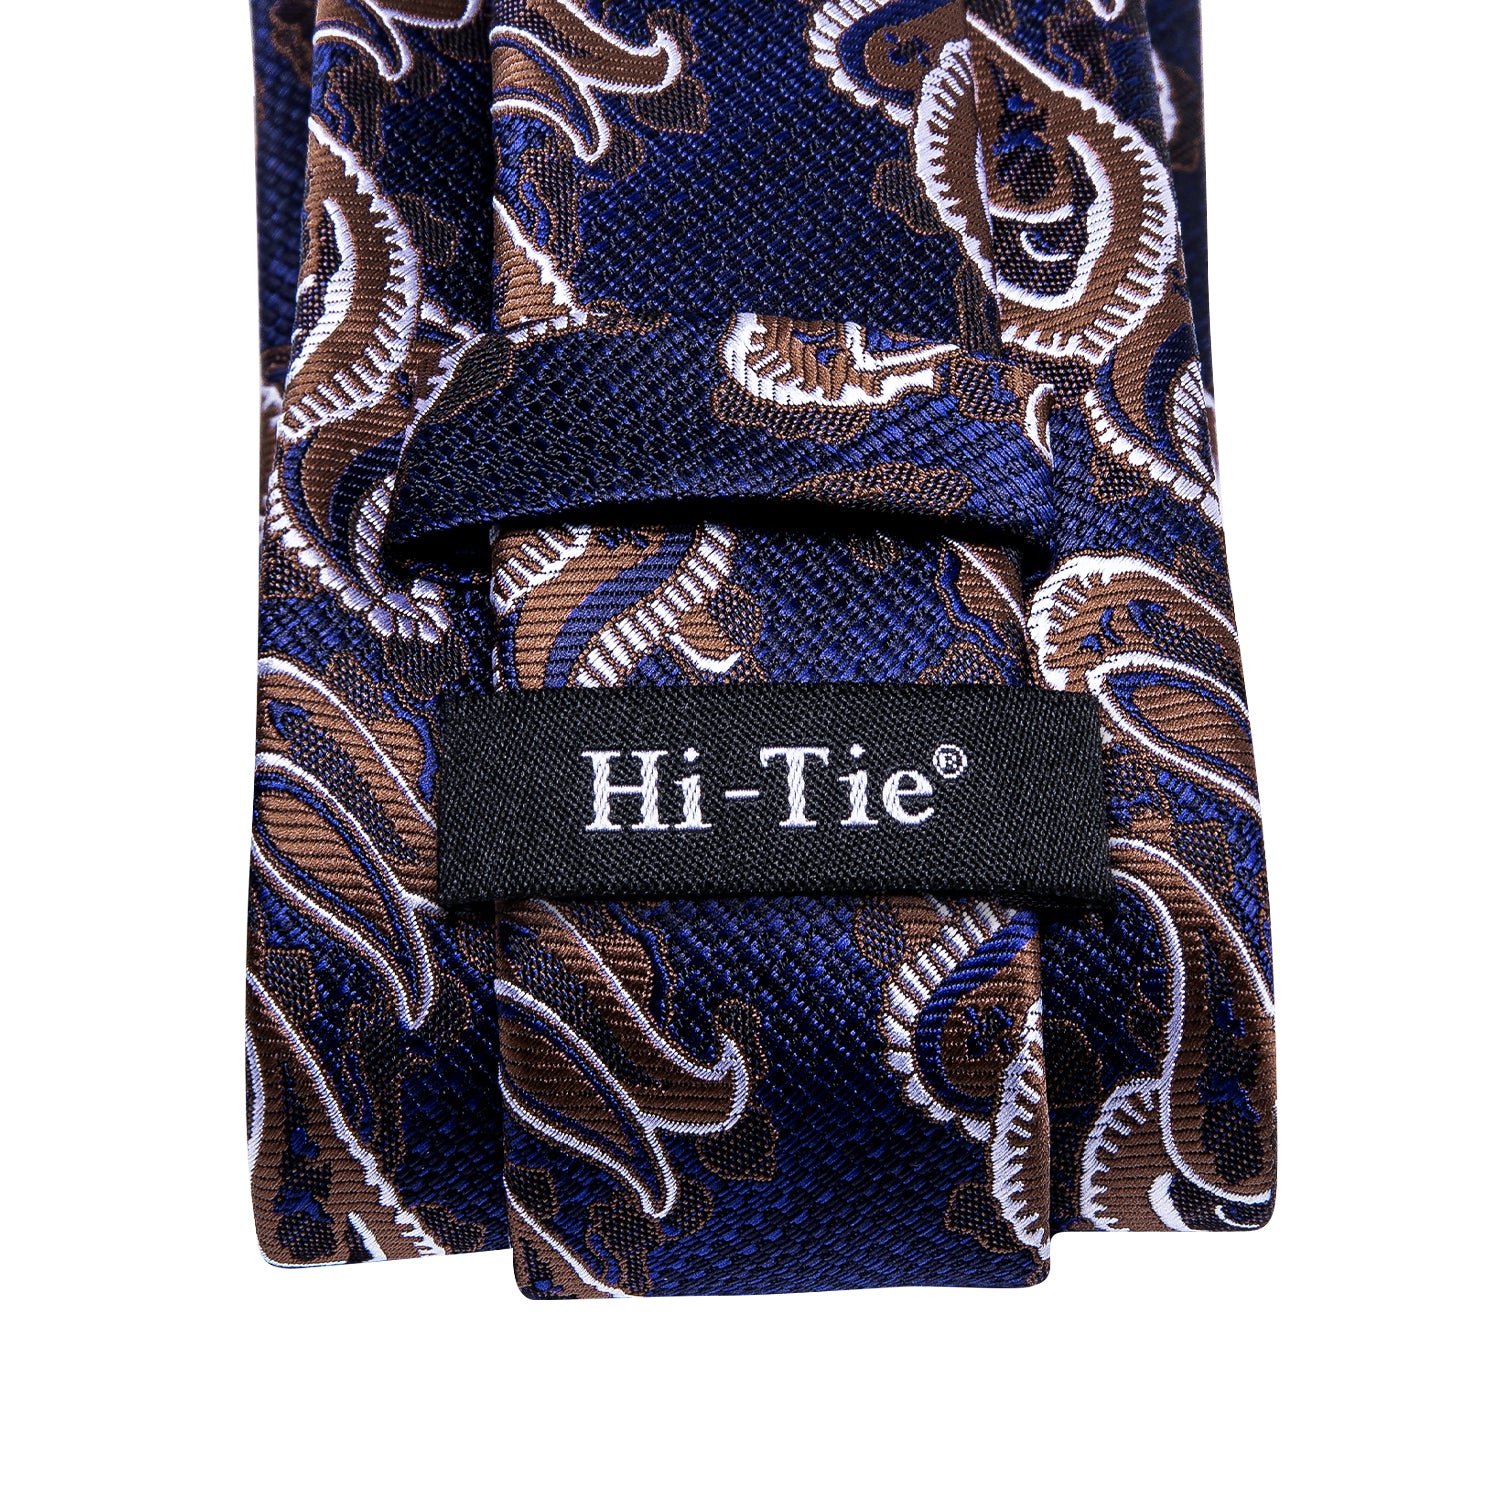 Blue Brown Paisley Tie Pocket Square Cufflinks Set